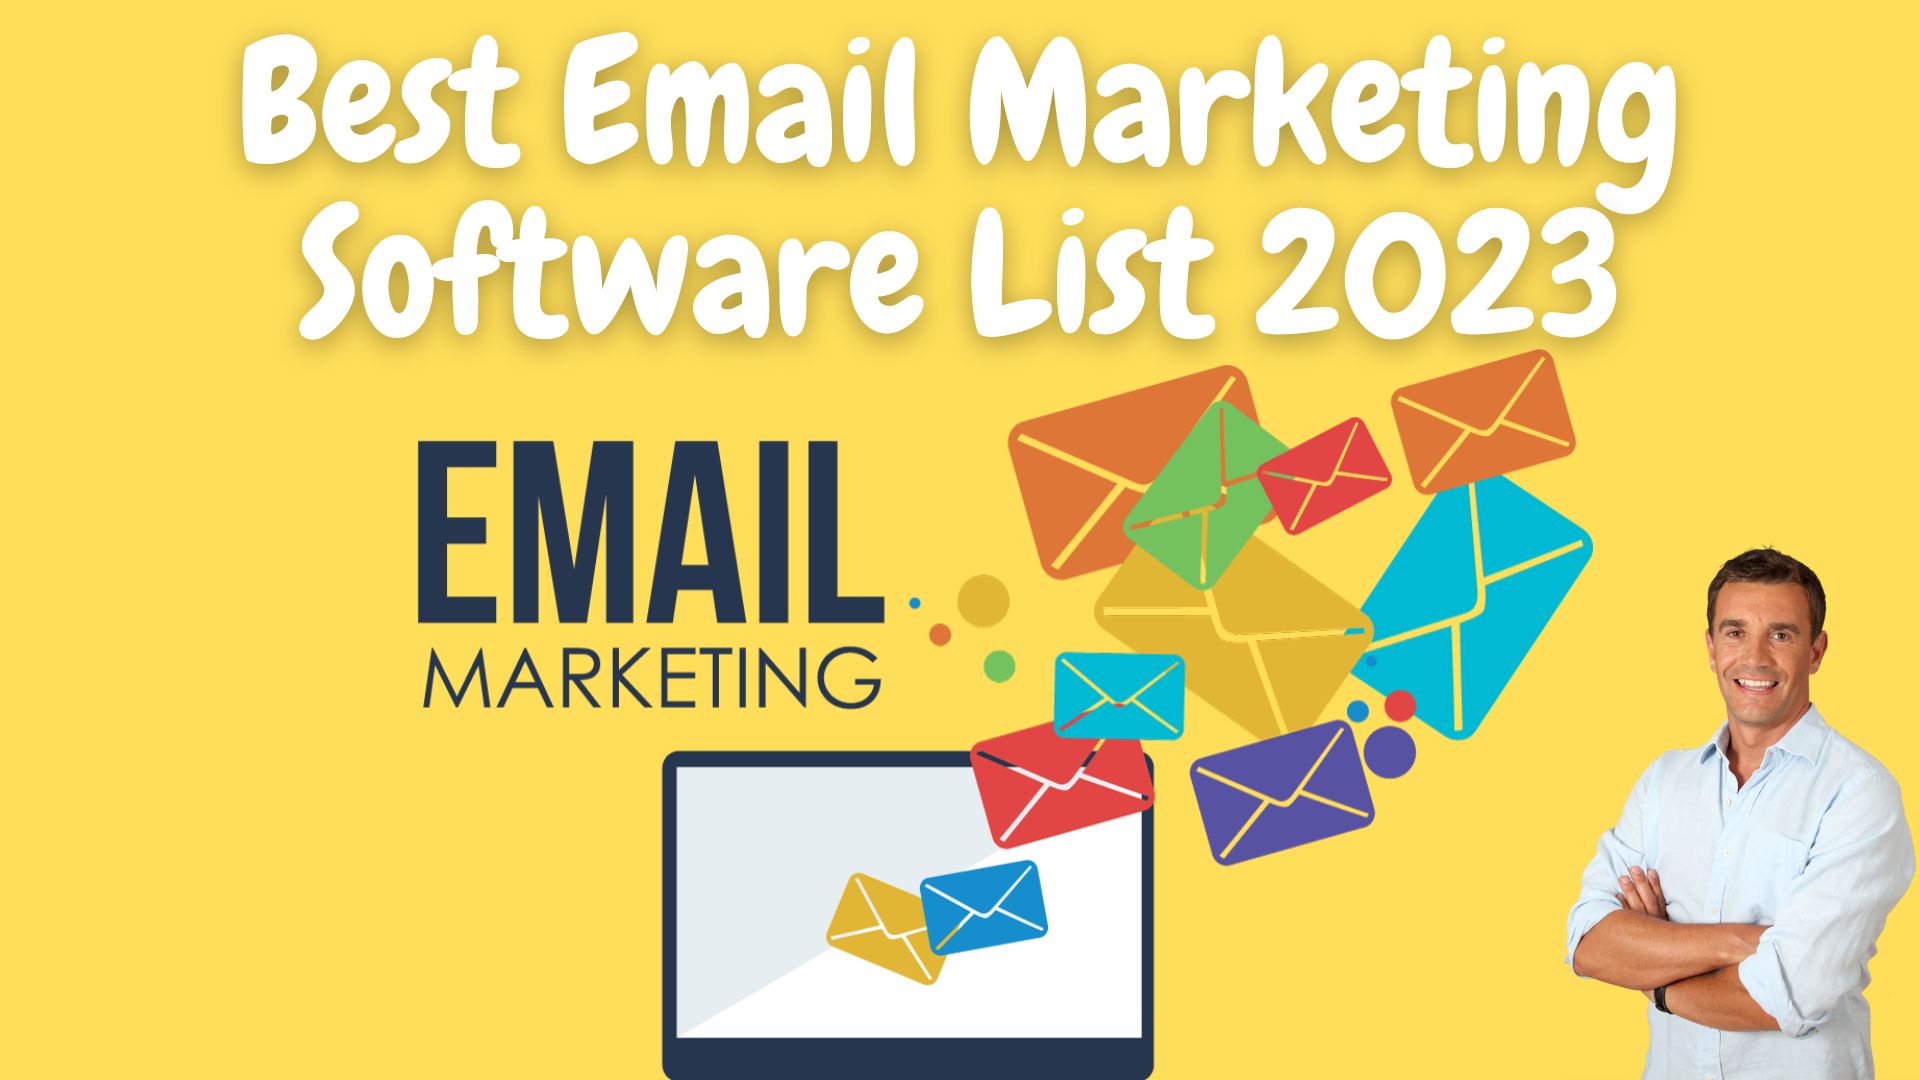 Best Email Marketing Software List 2023